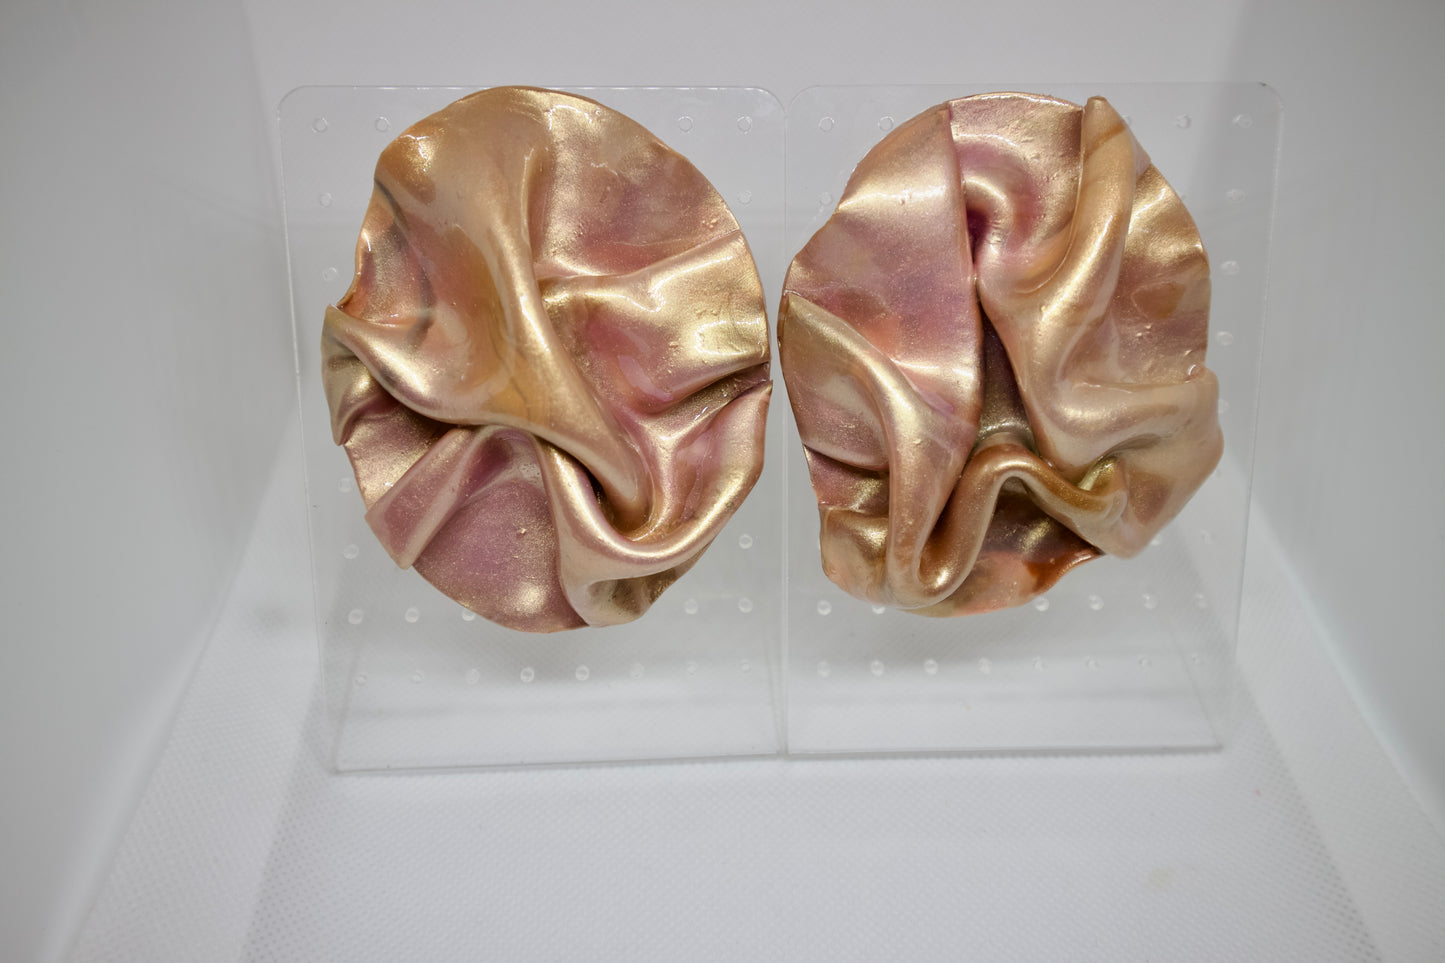 "The KeKe’s" Large Rose Gold Stud Earrings #1 - lightweight